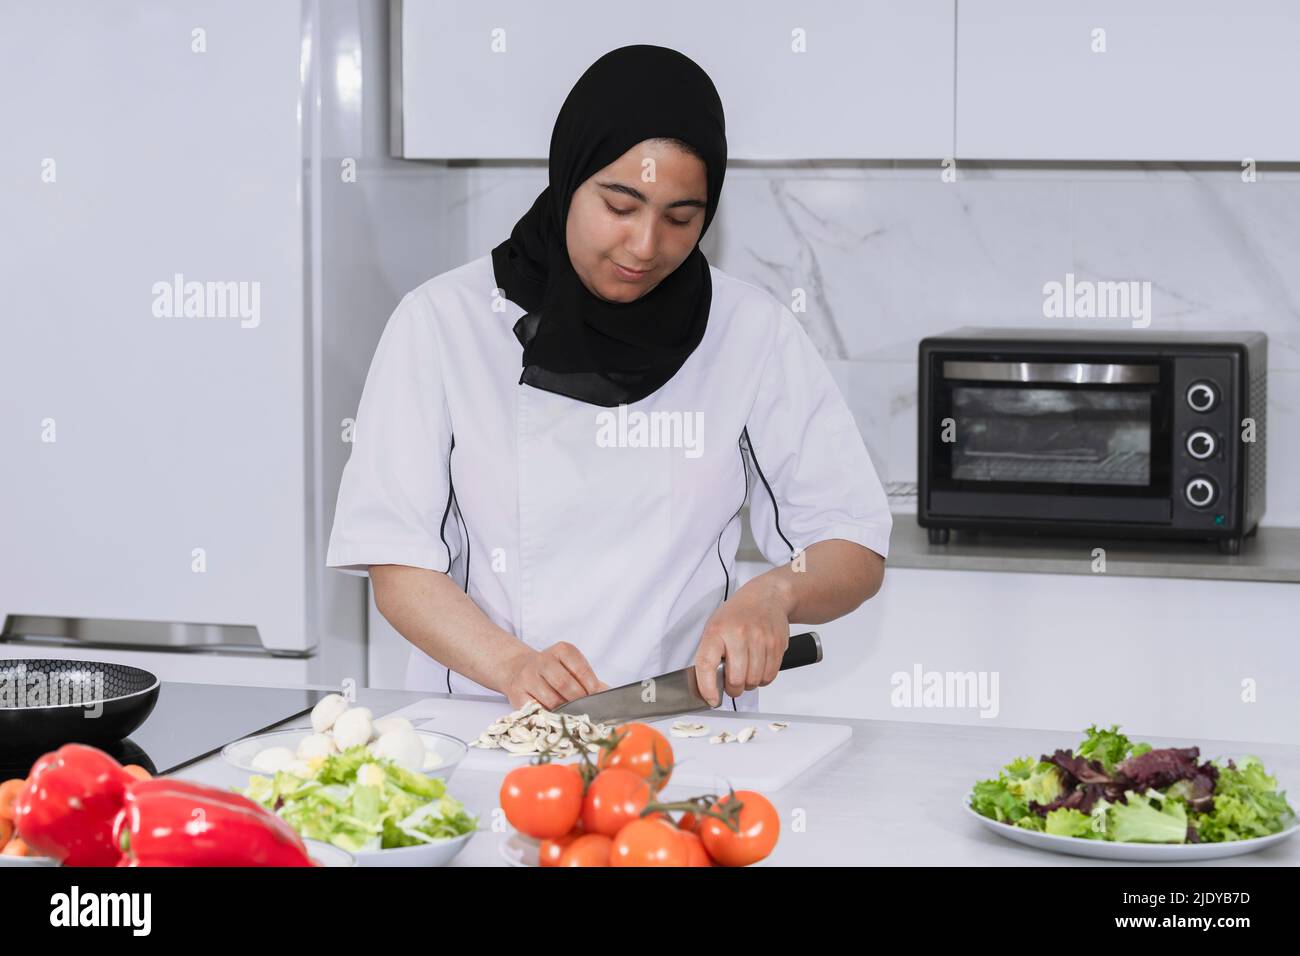 Maghrebi woman with a hijab cutting mushrooms Stock Photo